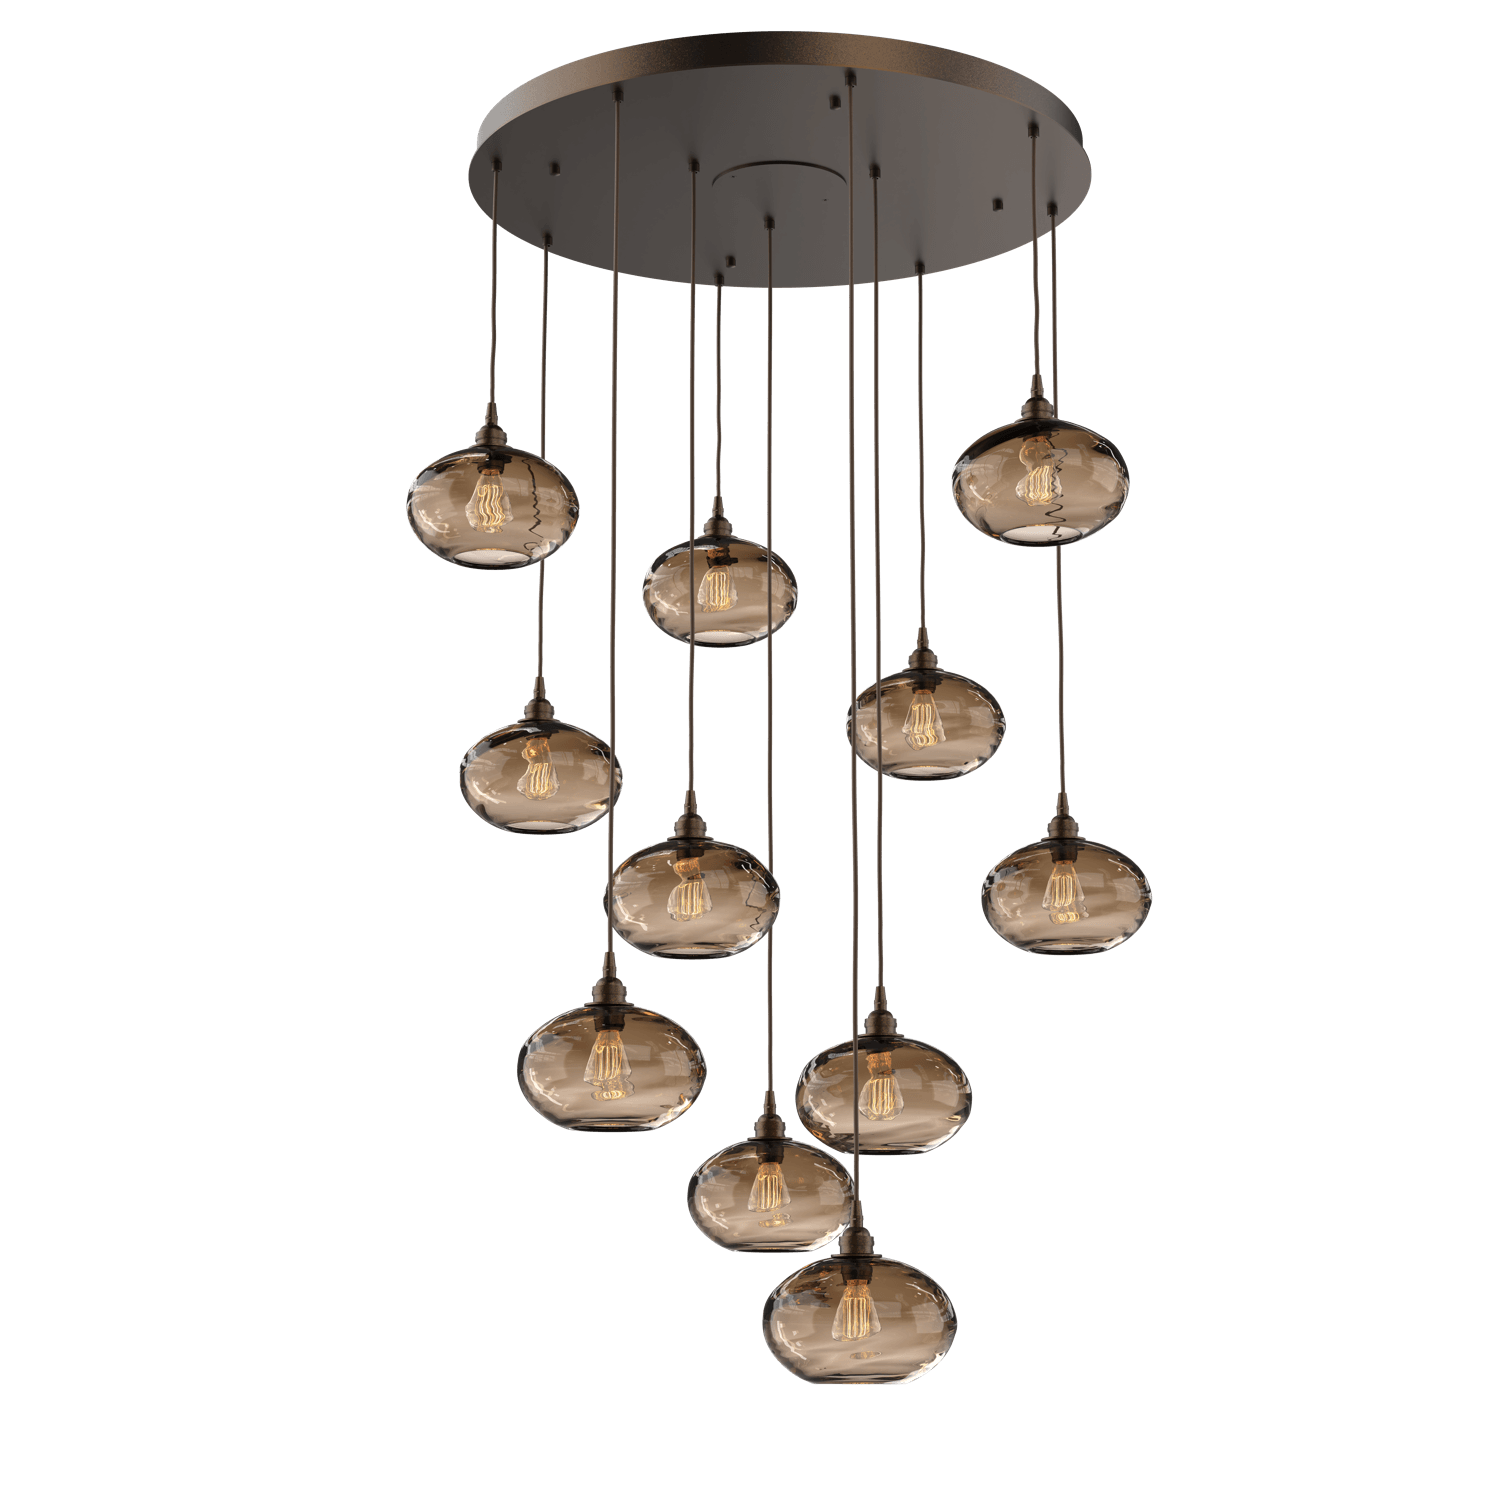 CHB0036-11-FB-OB-Hammerton-Studio-Optic-Blown-Glass-Coppa-11-light-round-pendant-chandelier-with-flat-bronze-finish-and-optic-bronze-blown-glass-shades-and-incandescent-lamping